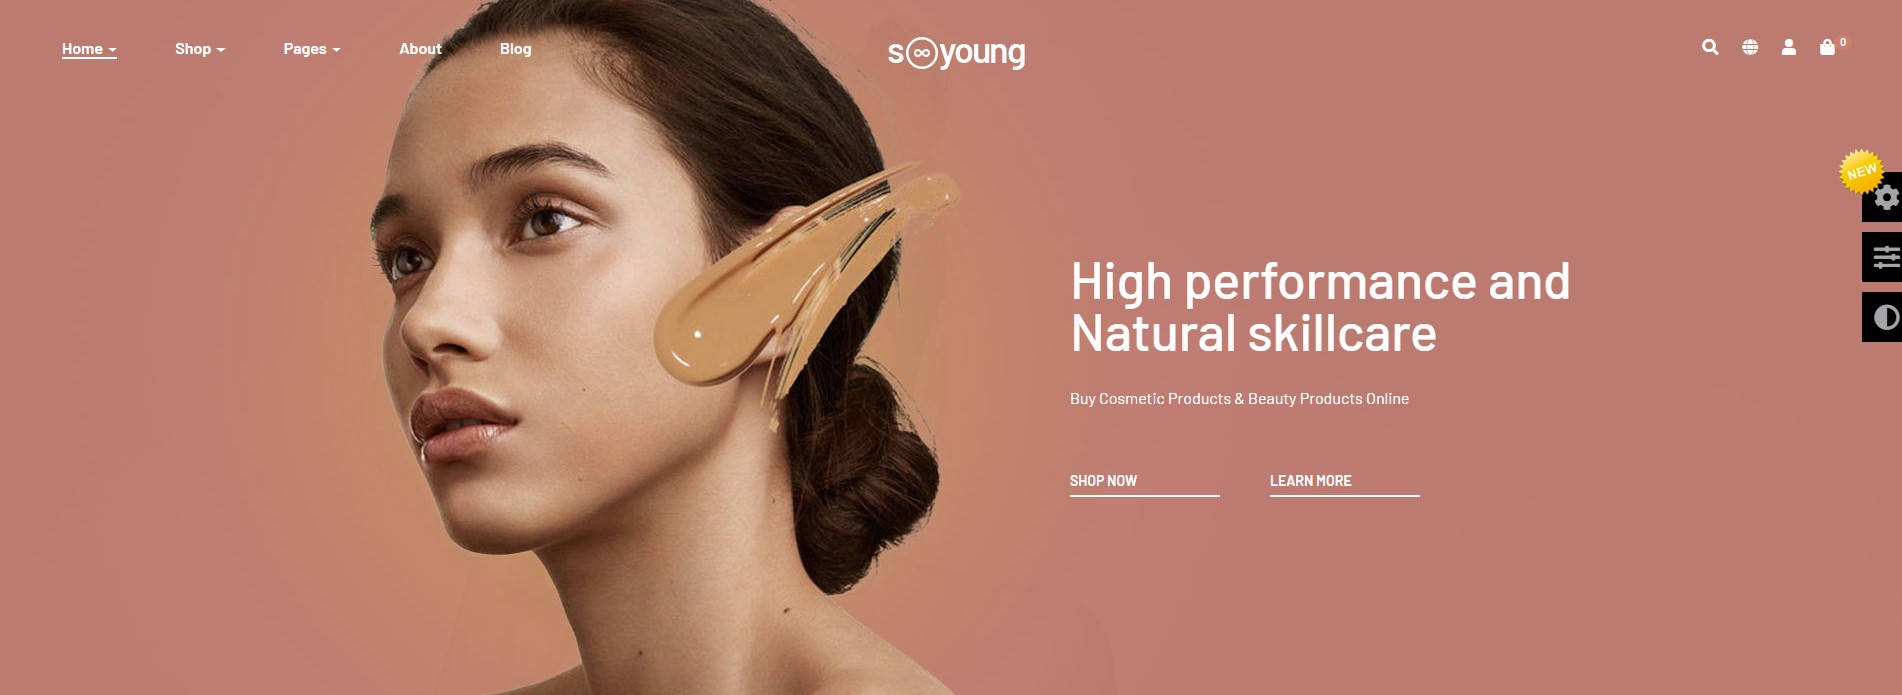 Leo Sooyoung best Premium PrestaShop Theme Cosmetics